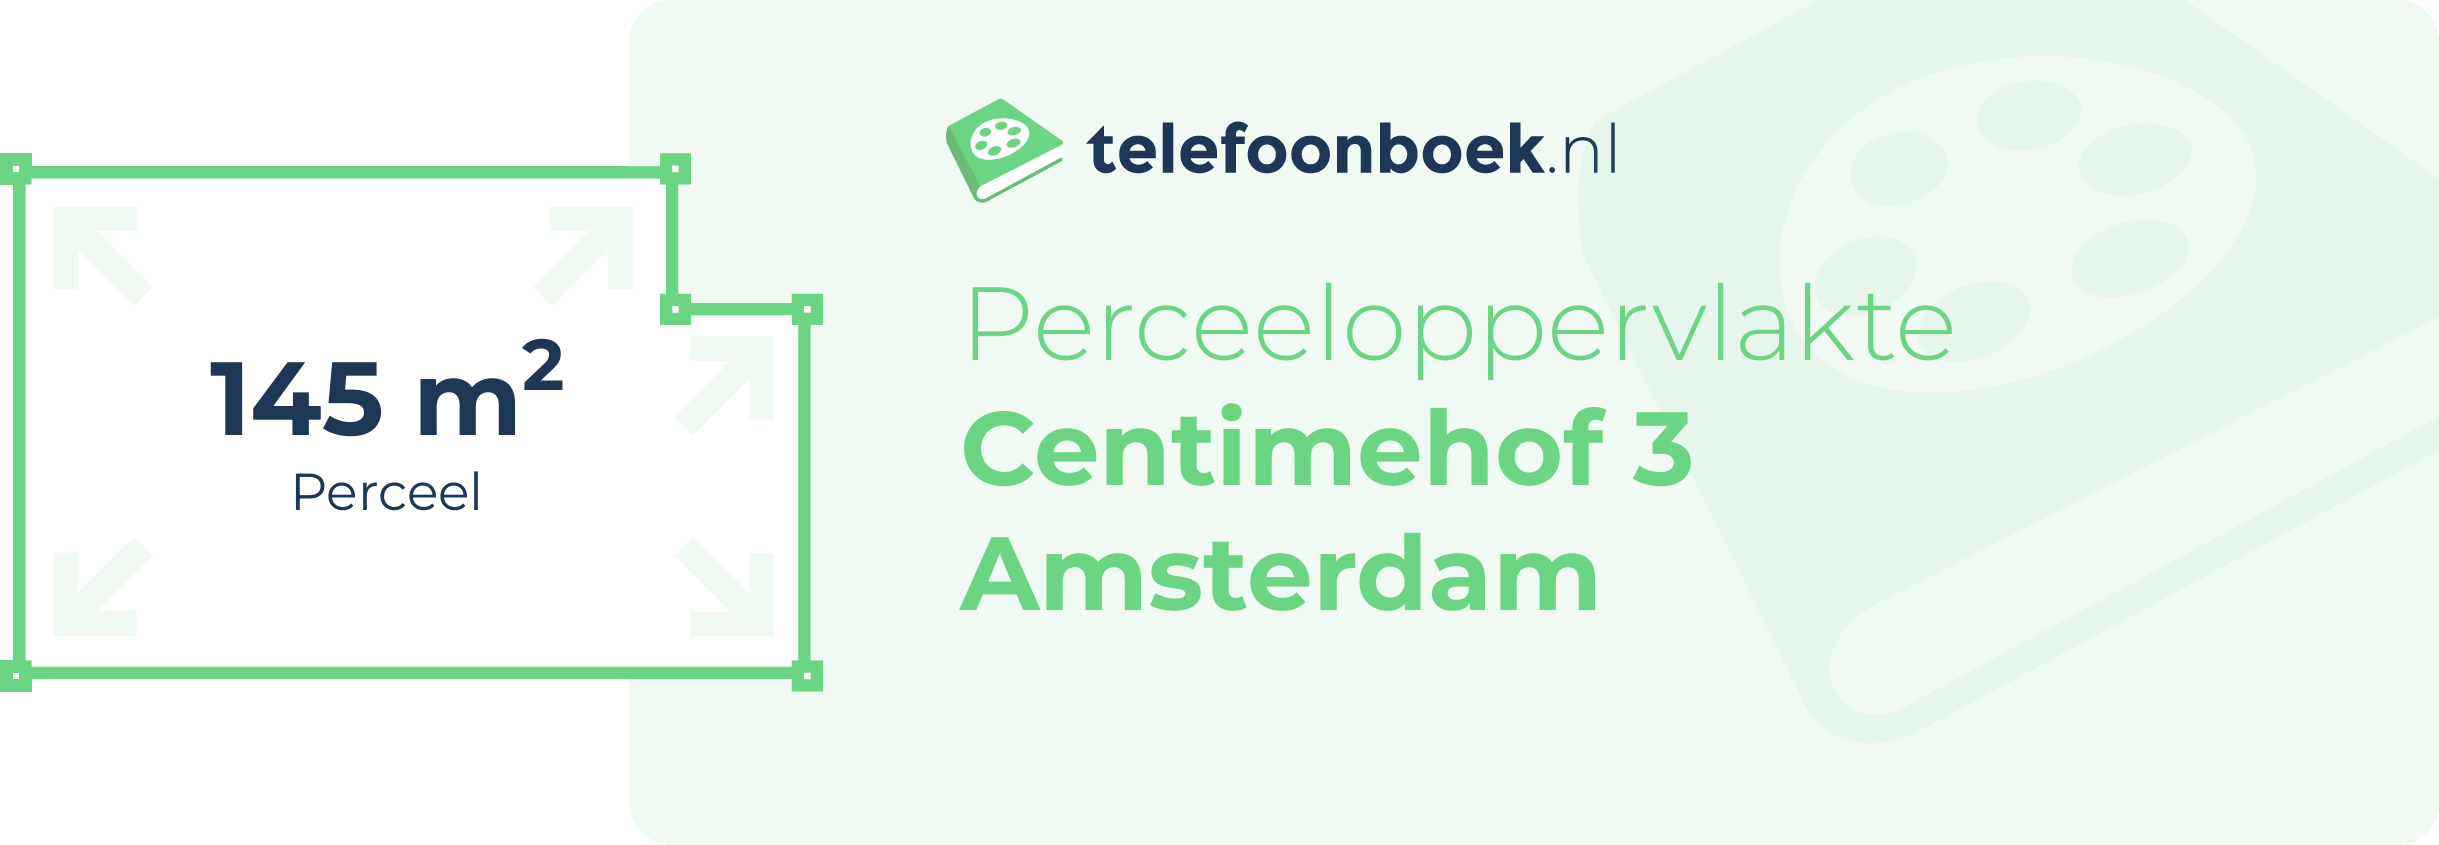 Perceeloppervlakte Centimehof 3 Amsterdam